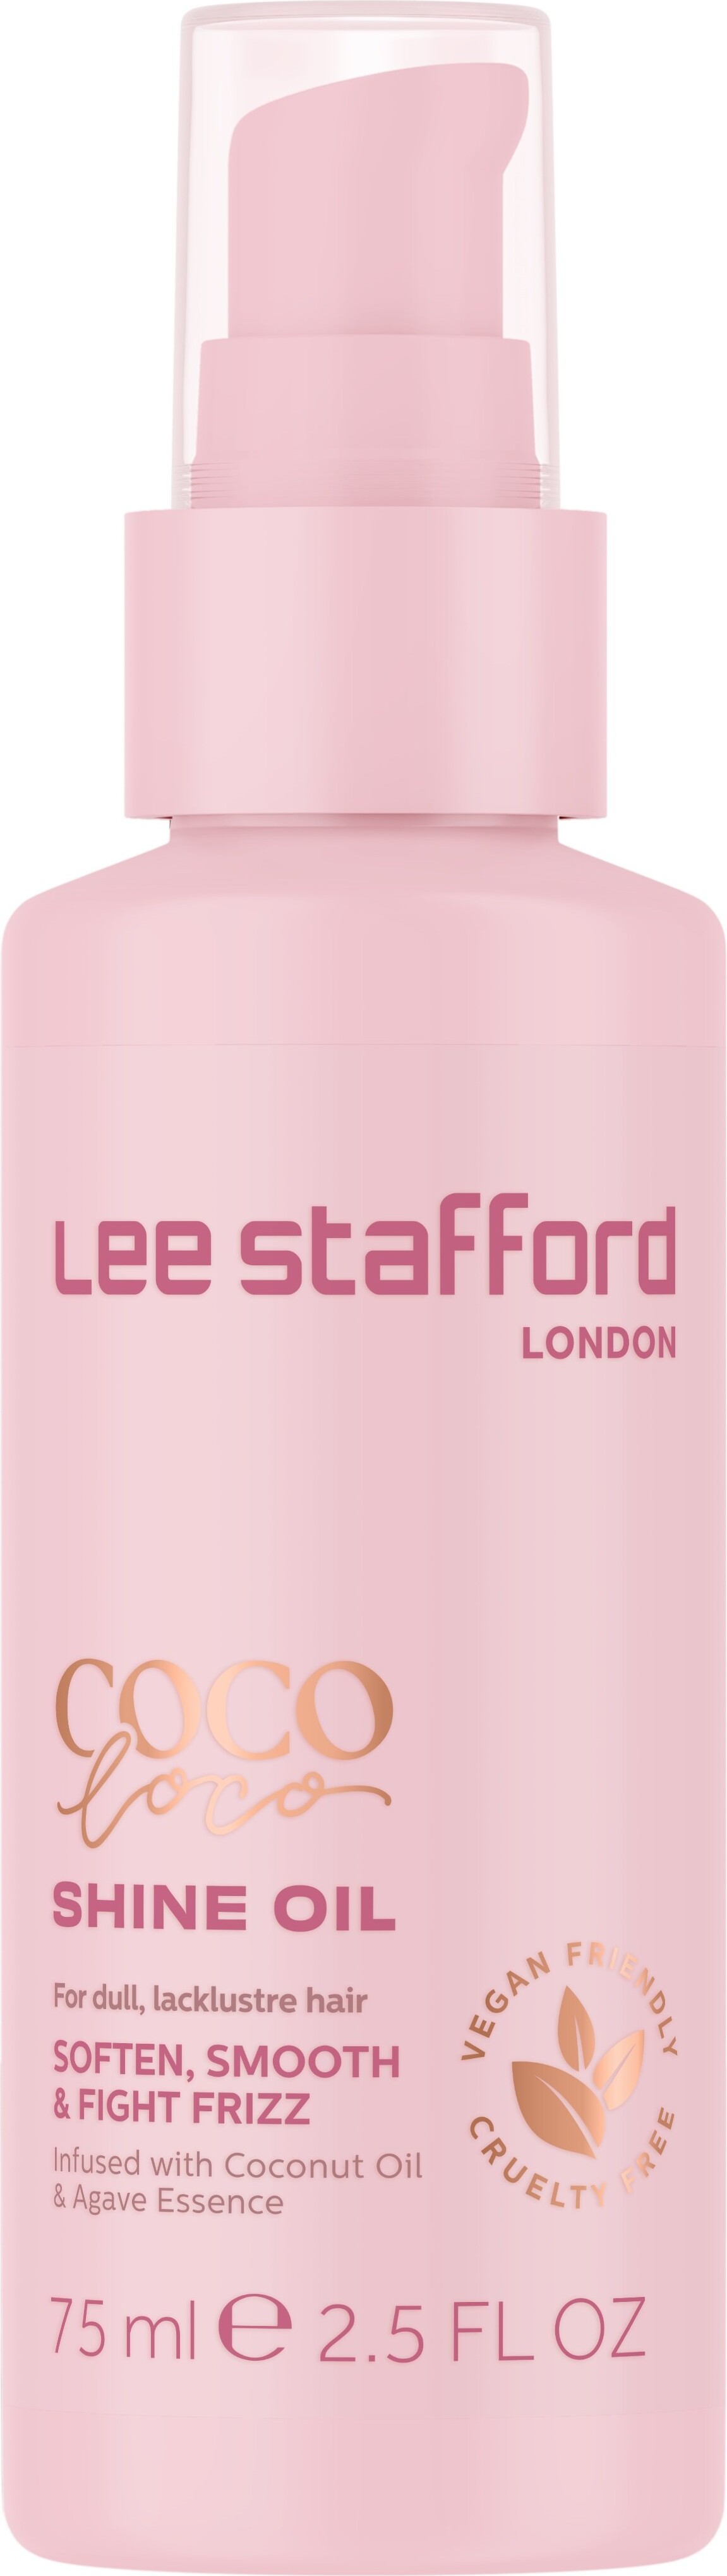 Se Lee Stafford - Coco Loco Shine Oil - 75 Ml hos Gucca.dk